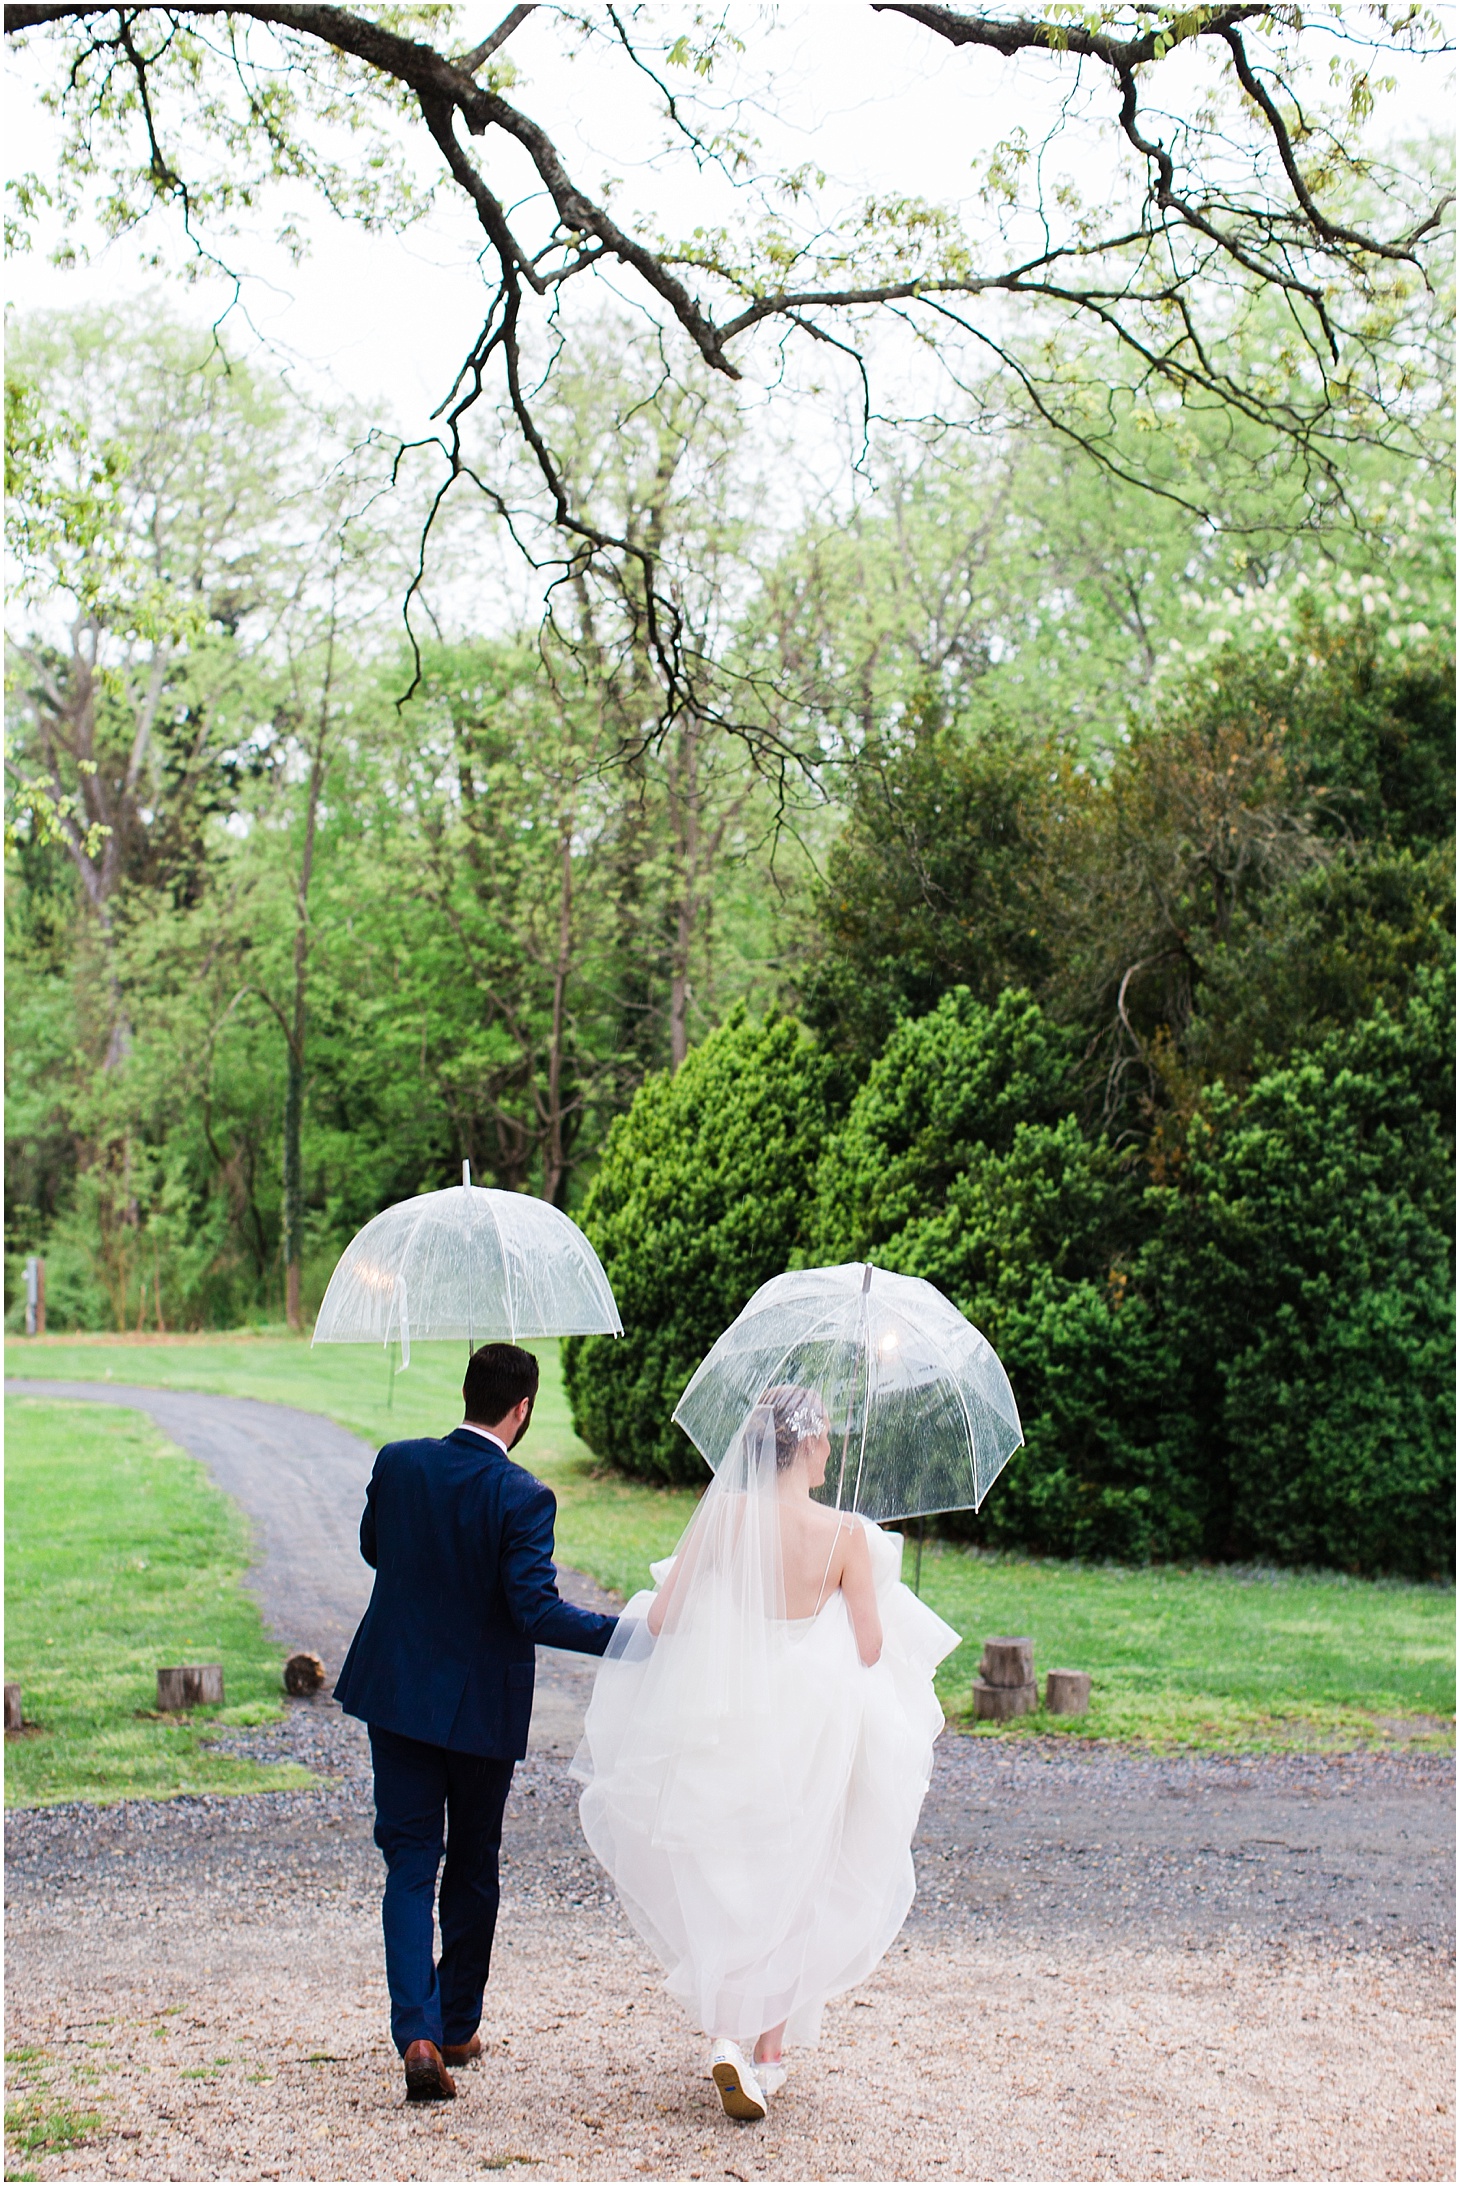 Wedding at Oatlands Historic House and Gardens, Rainy Springtime Garden Wedding at Oatlands Plantation, Sarah Bradshaw Photography, DC Wedding Photographer